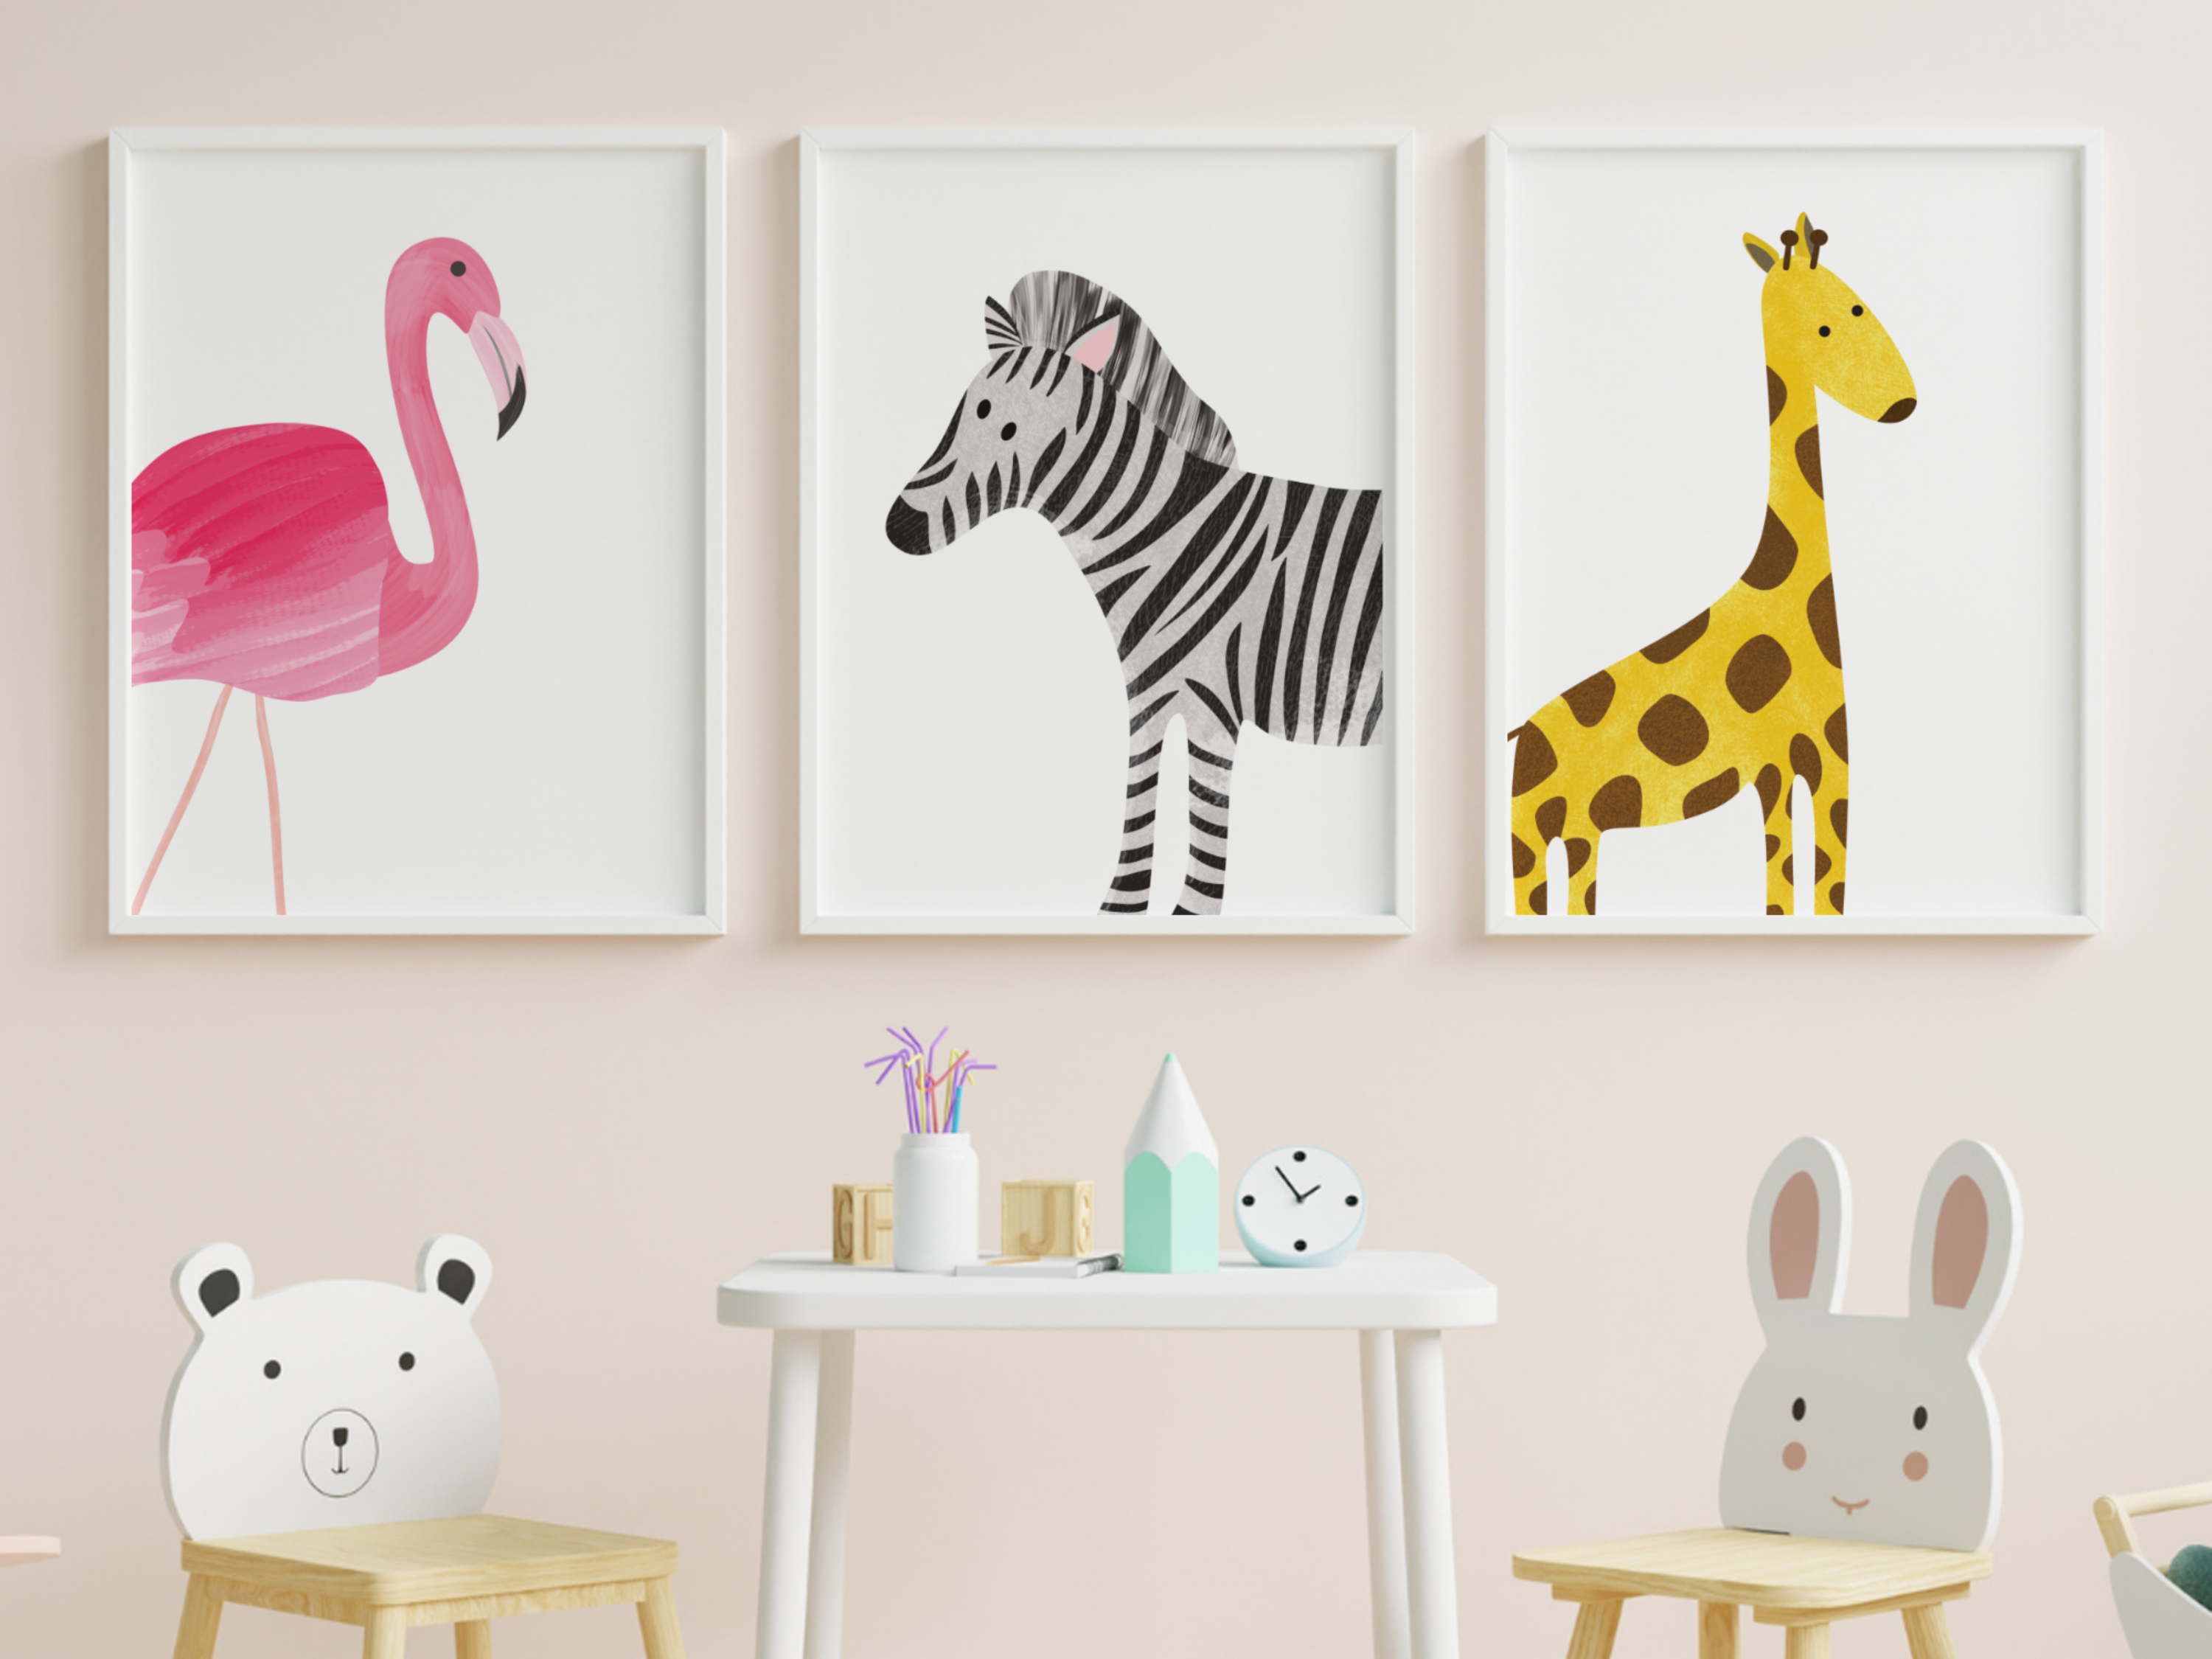 Bright Safari Animal Prints hung on a playroom wall with flamingo, giraffe and zebra